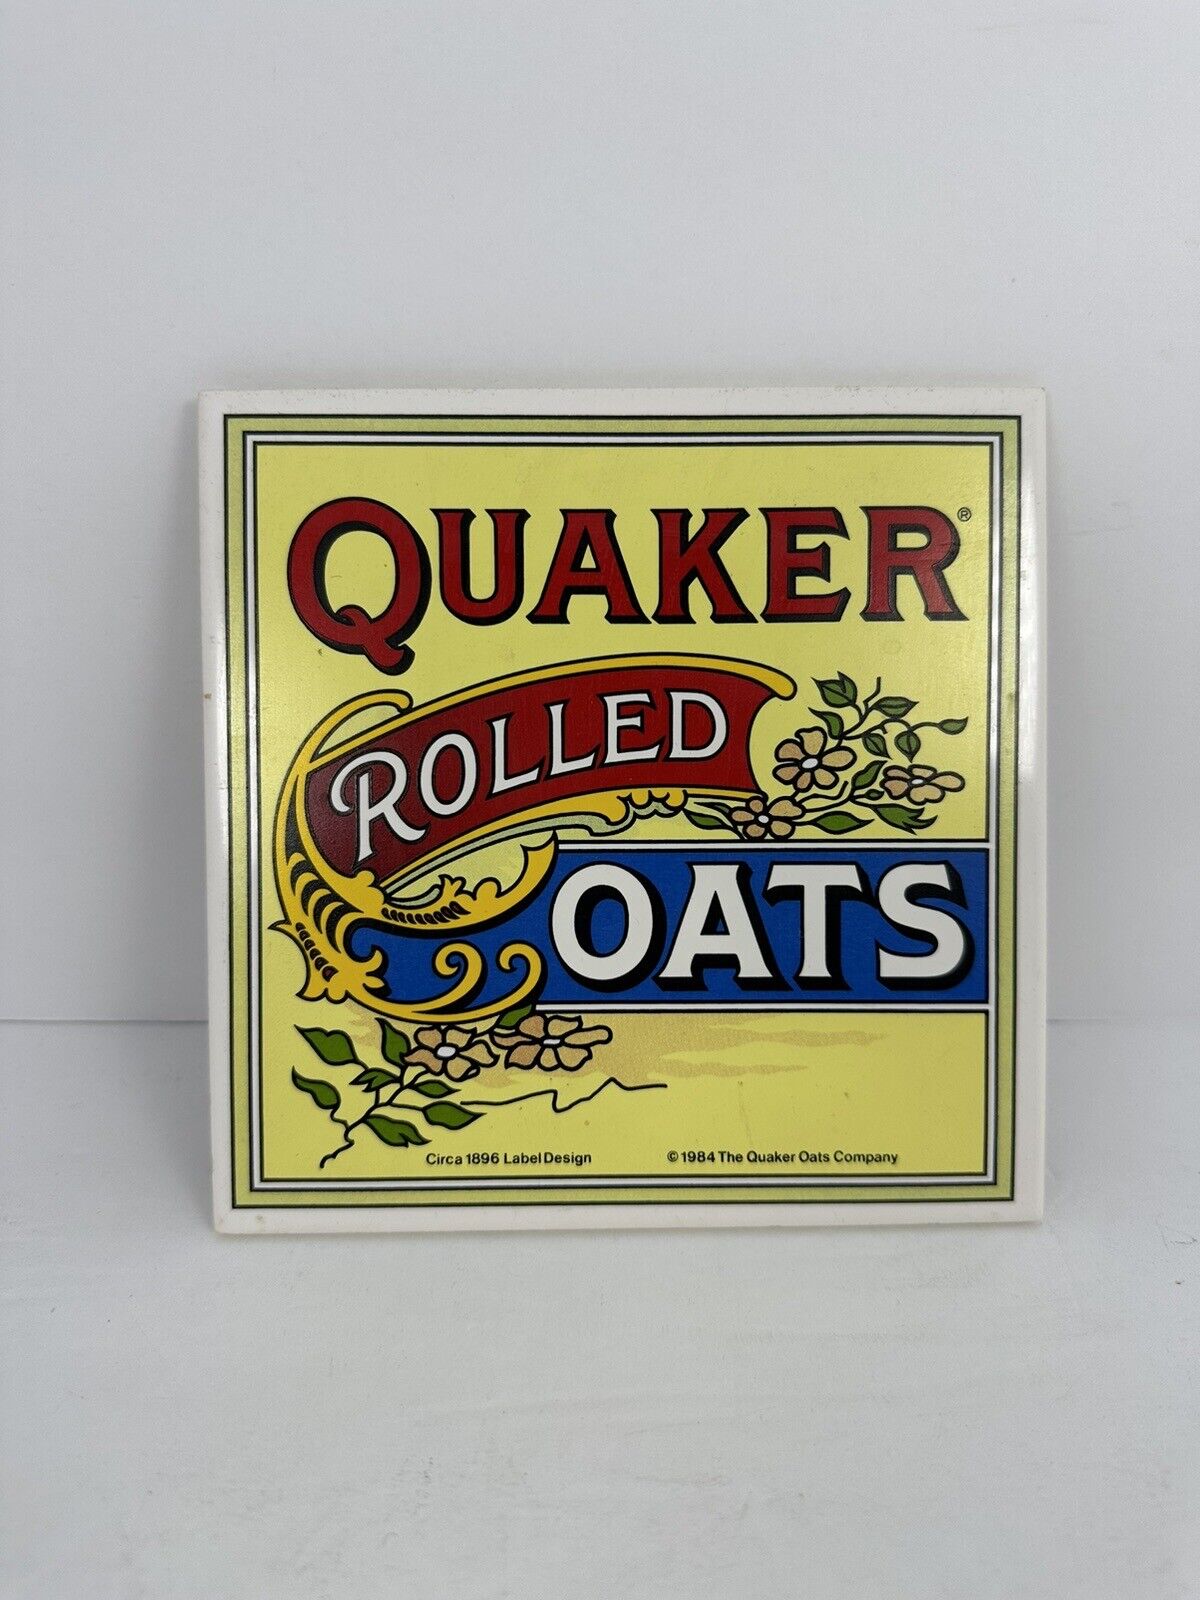 Quaker Rolled Oats 1984 Decorative Wall Tile Circa 1896 Label Design